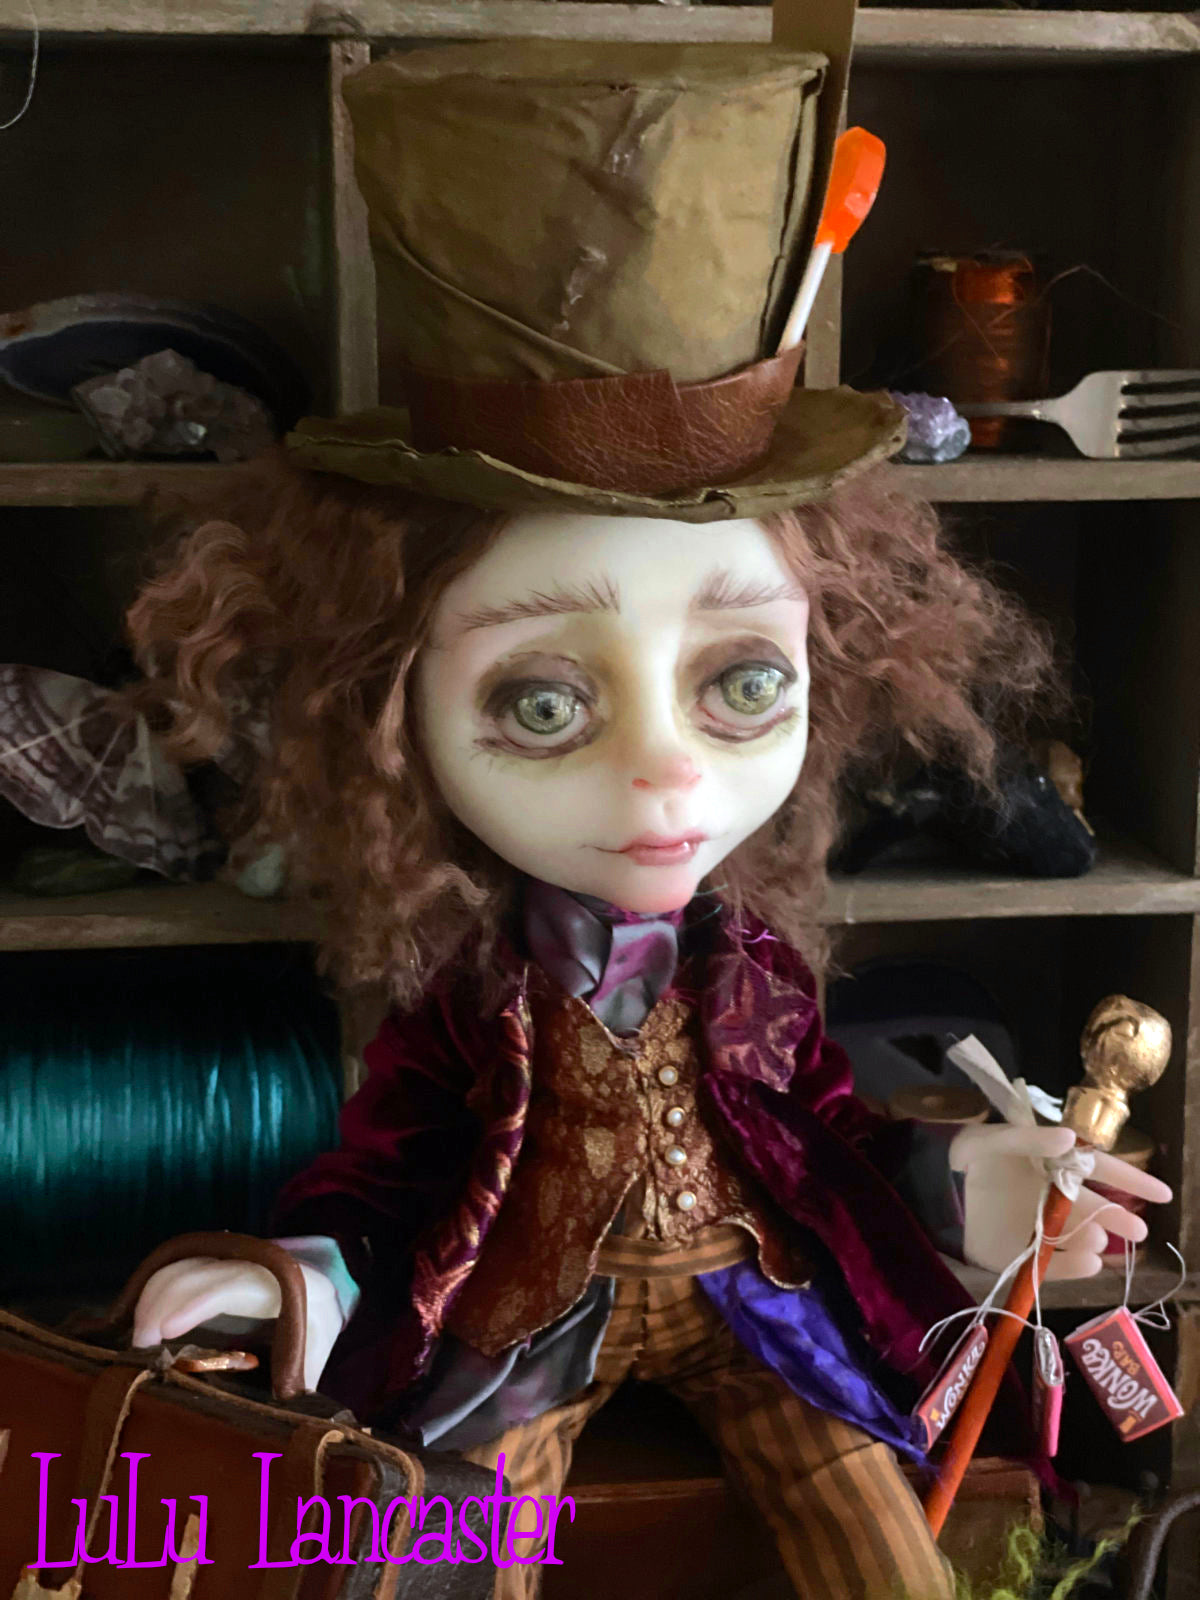 Traveling Willy Wonka Original LuLu Lancaster Art Doll